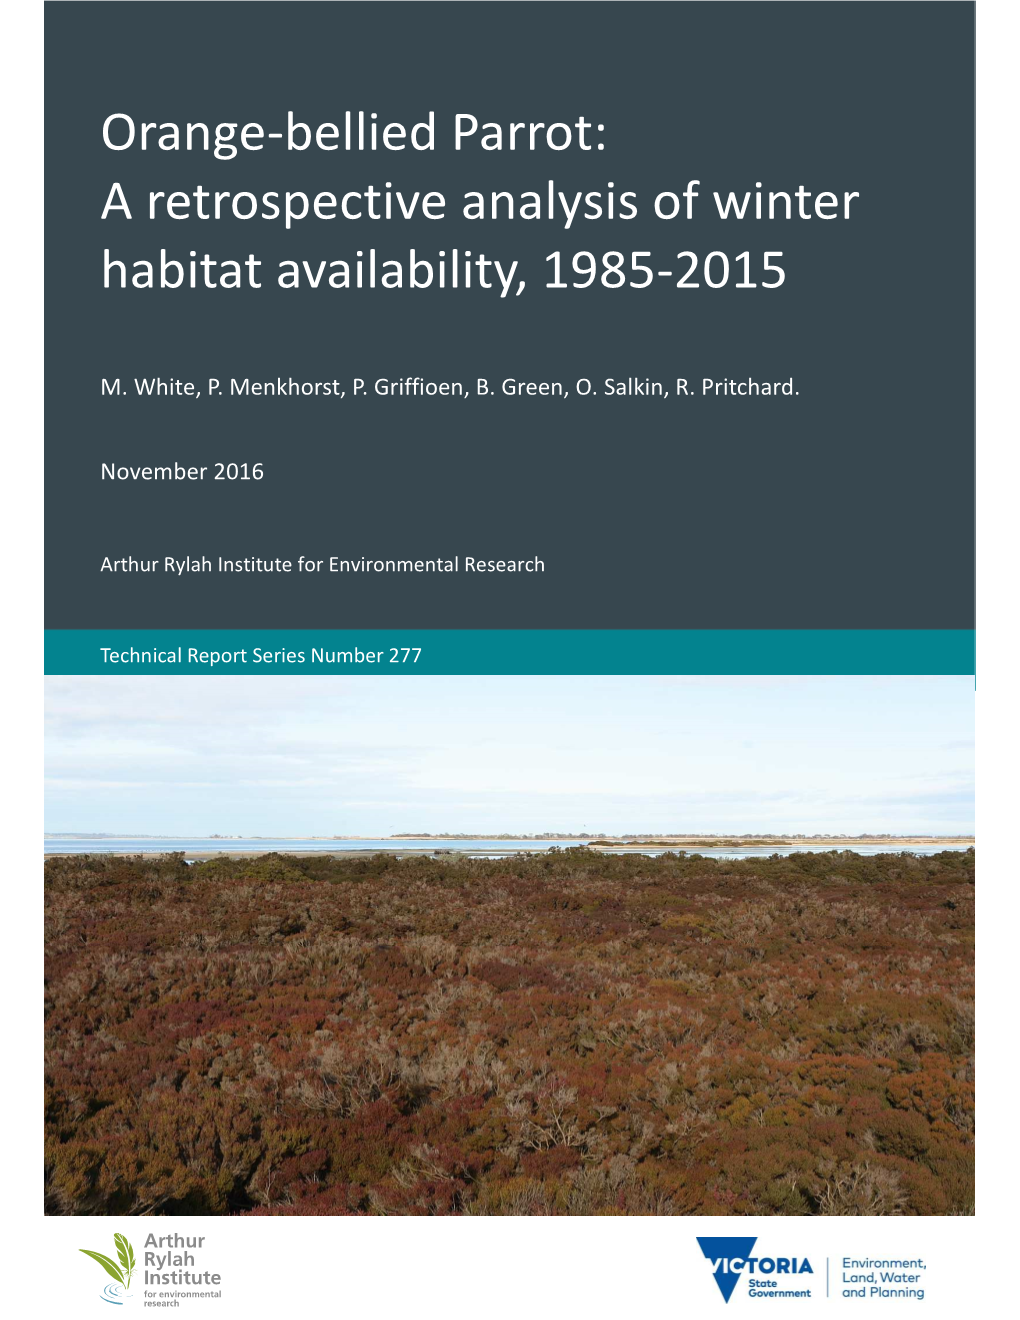 Orange-Bellied Parrot: a Retrospective Analysis of Winter Habitat Availability, 1985-2015